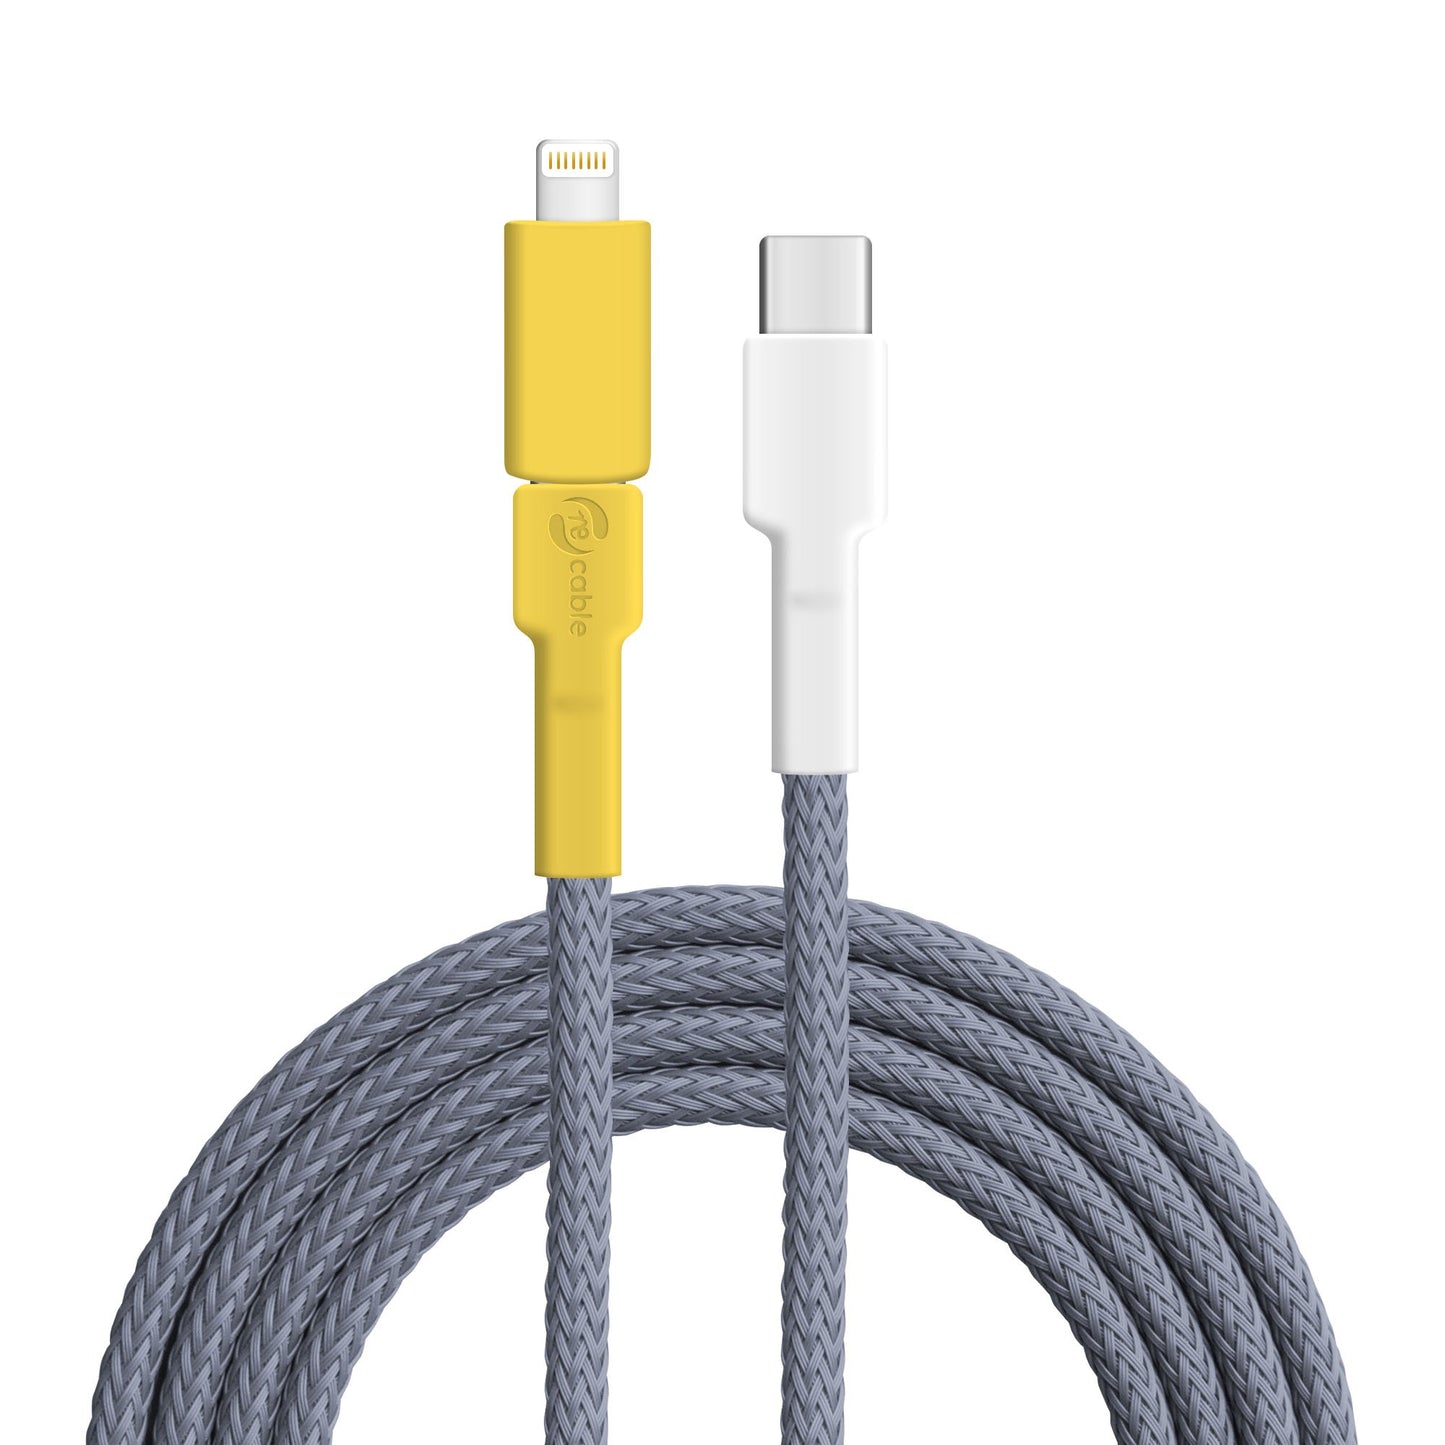 USB-Kabel, Design: Gelb­kehlvireo, Anschlüsse: USB C auf Micro-USB mit Lightning Adapter (verbunden)